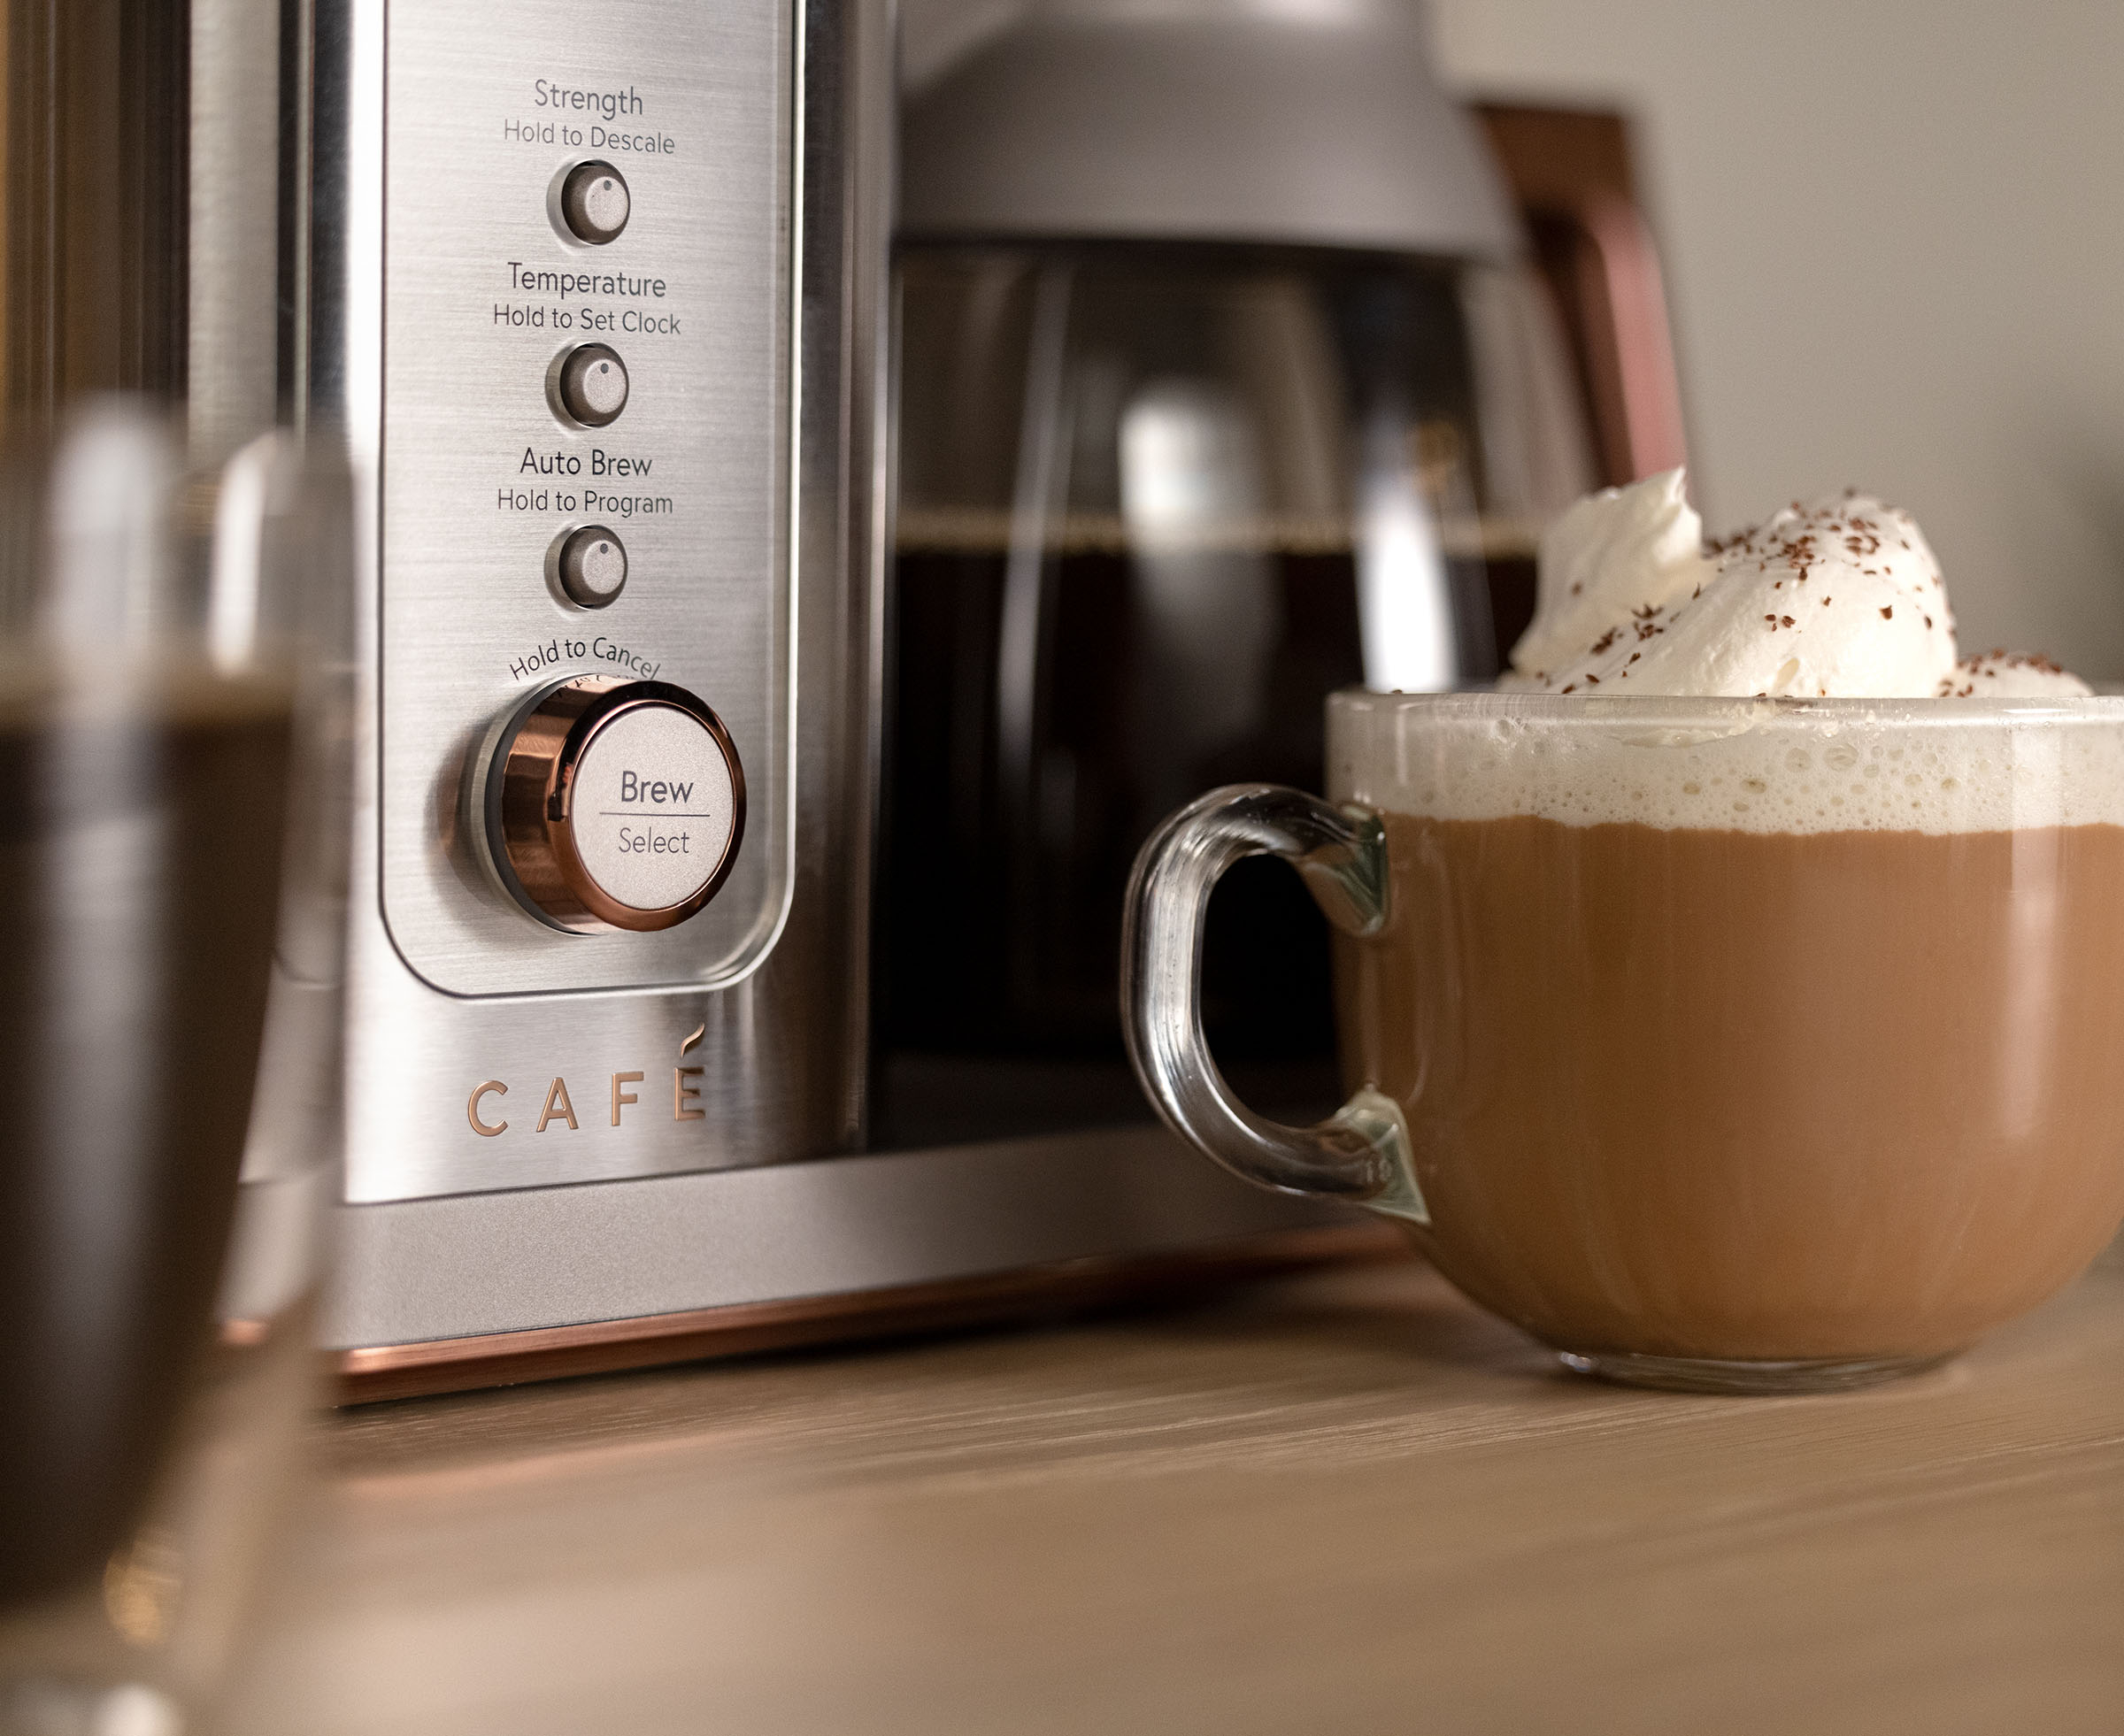 6 Cups Home Use Smart Coffee Maker Semi Automatic Drip Coffee Maker Ca –  RAF Appliances